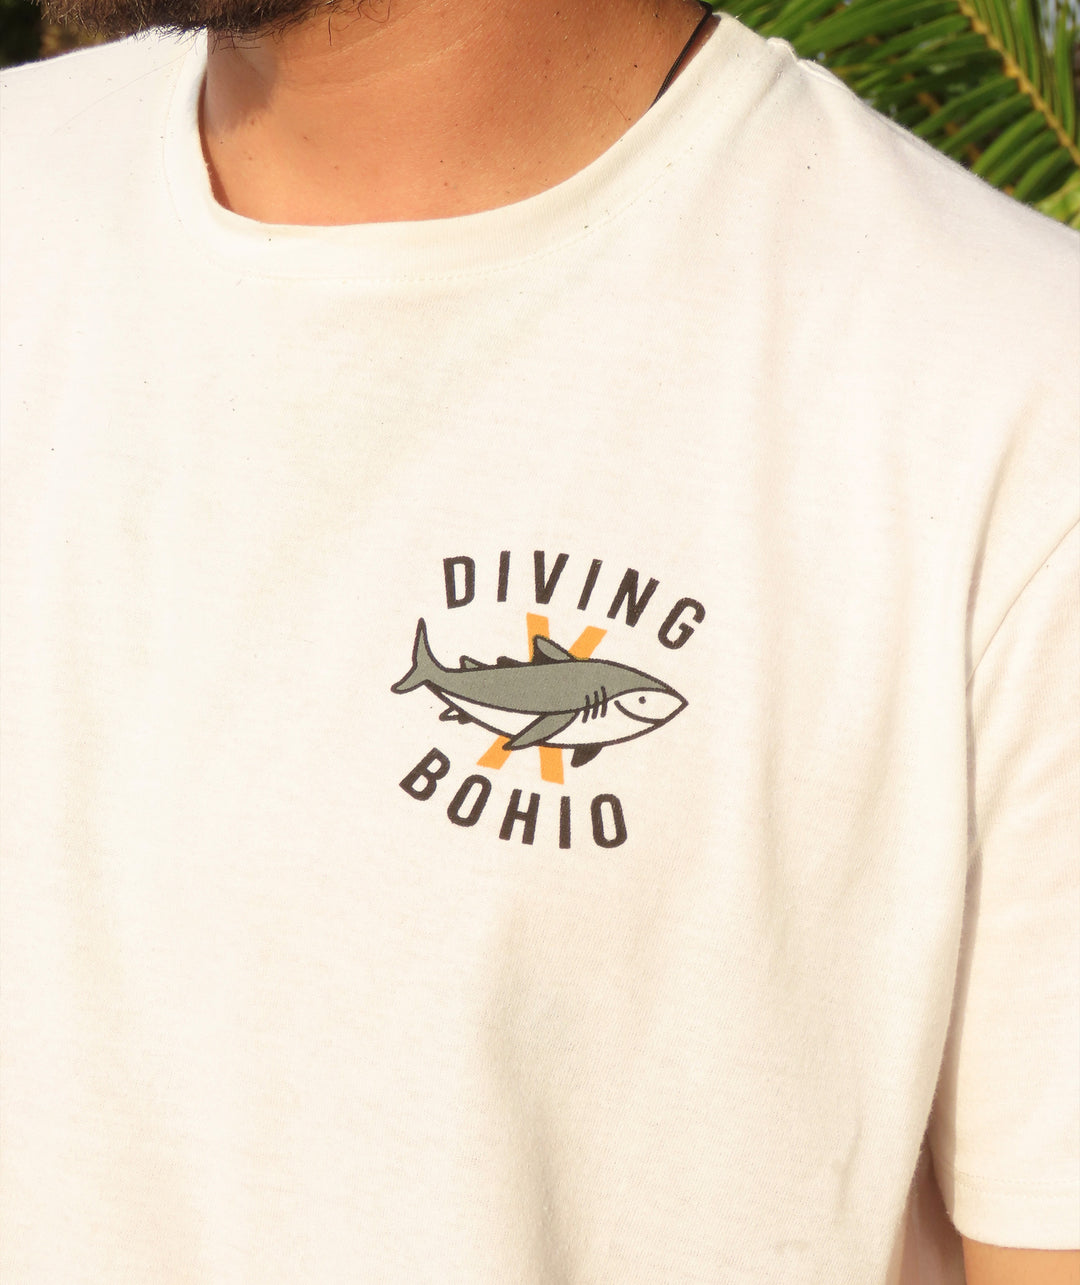 Diving X Bohío (Camiseta unisex Salvando Mares)